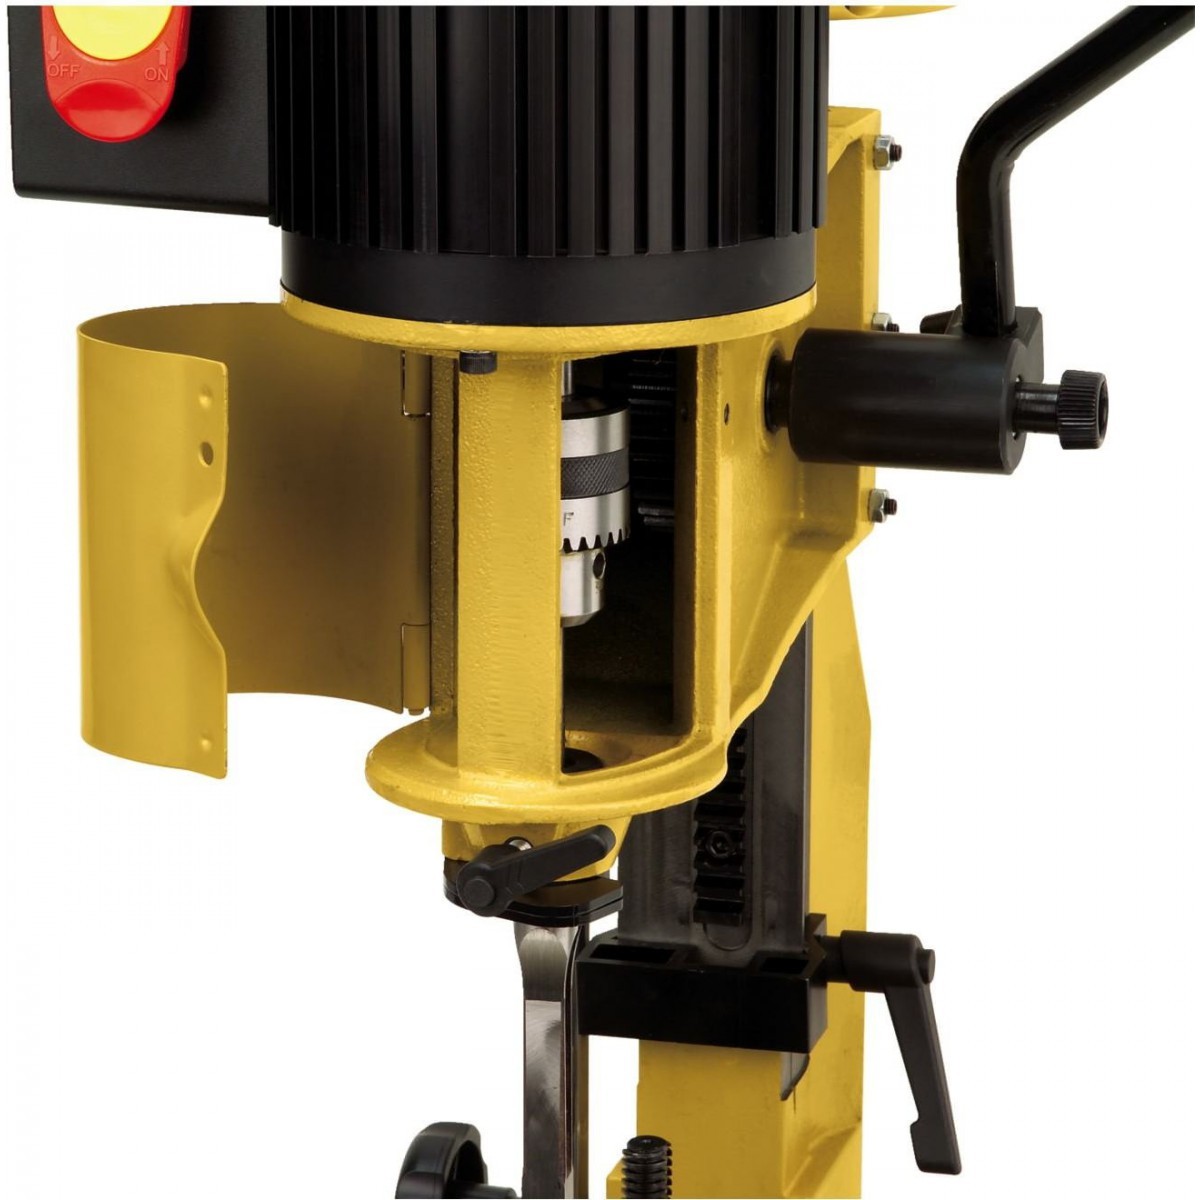 Powermatic 1791310 drill press